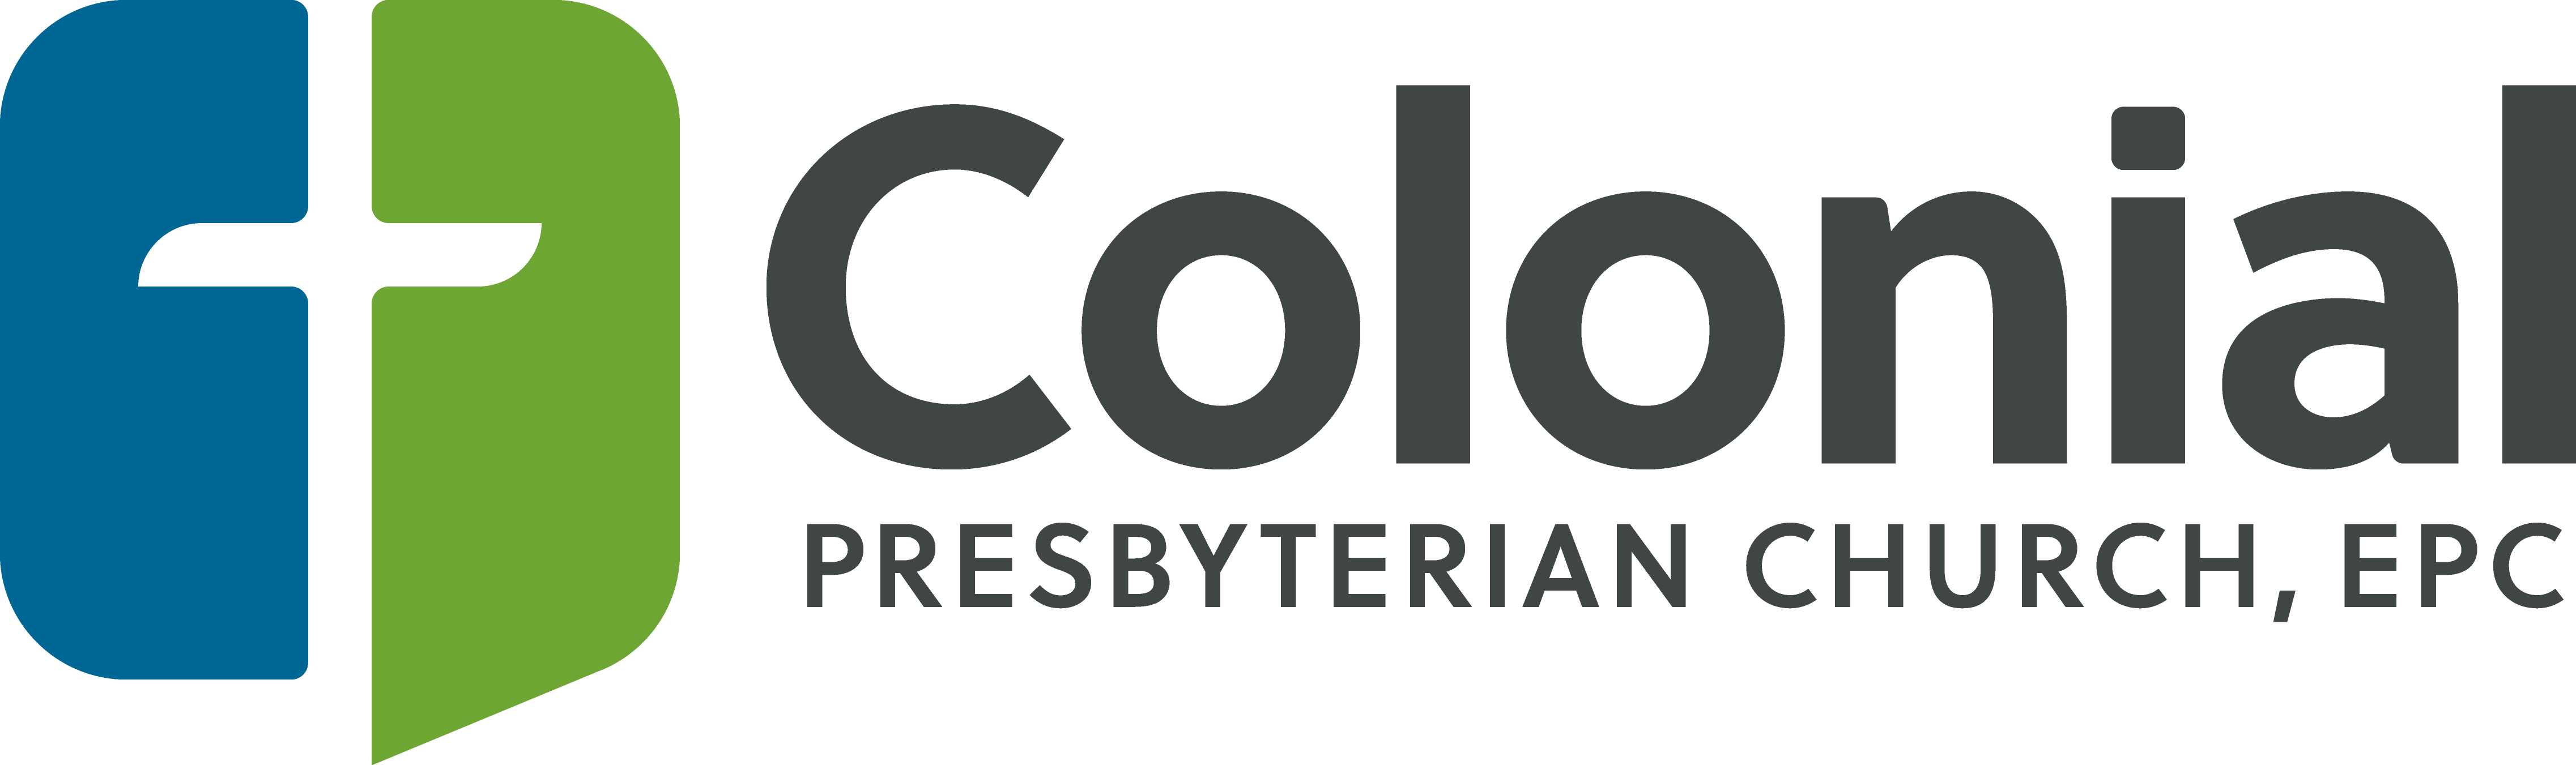 Colonial Logo - colonial presbyterian church logo wide color RGB • Colonial ...